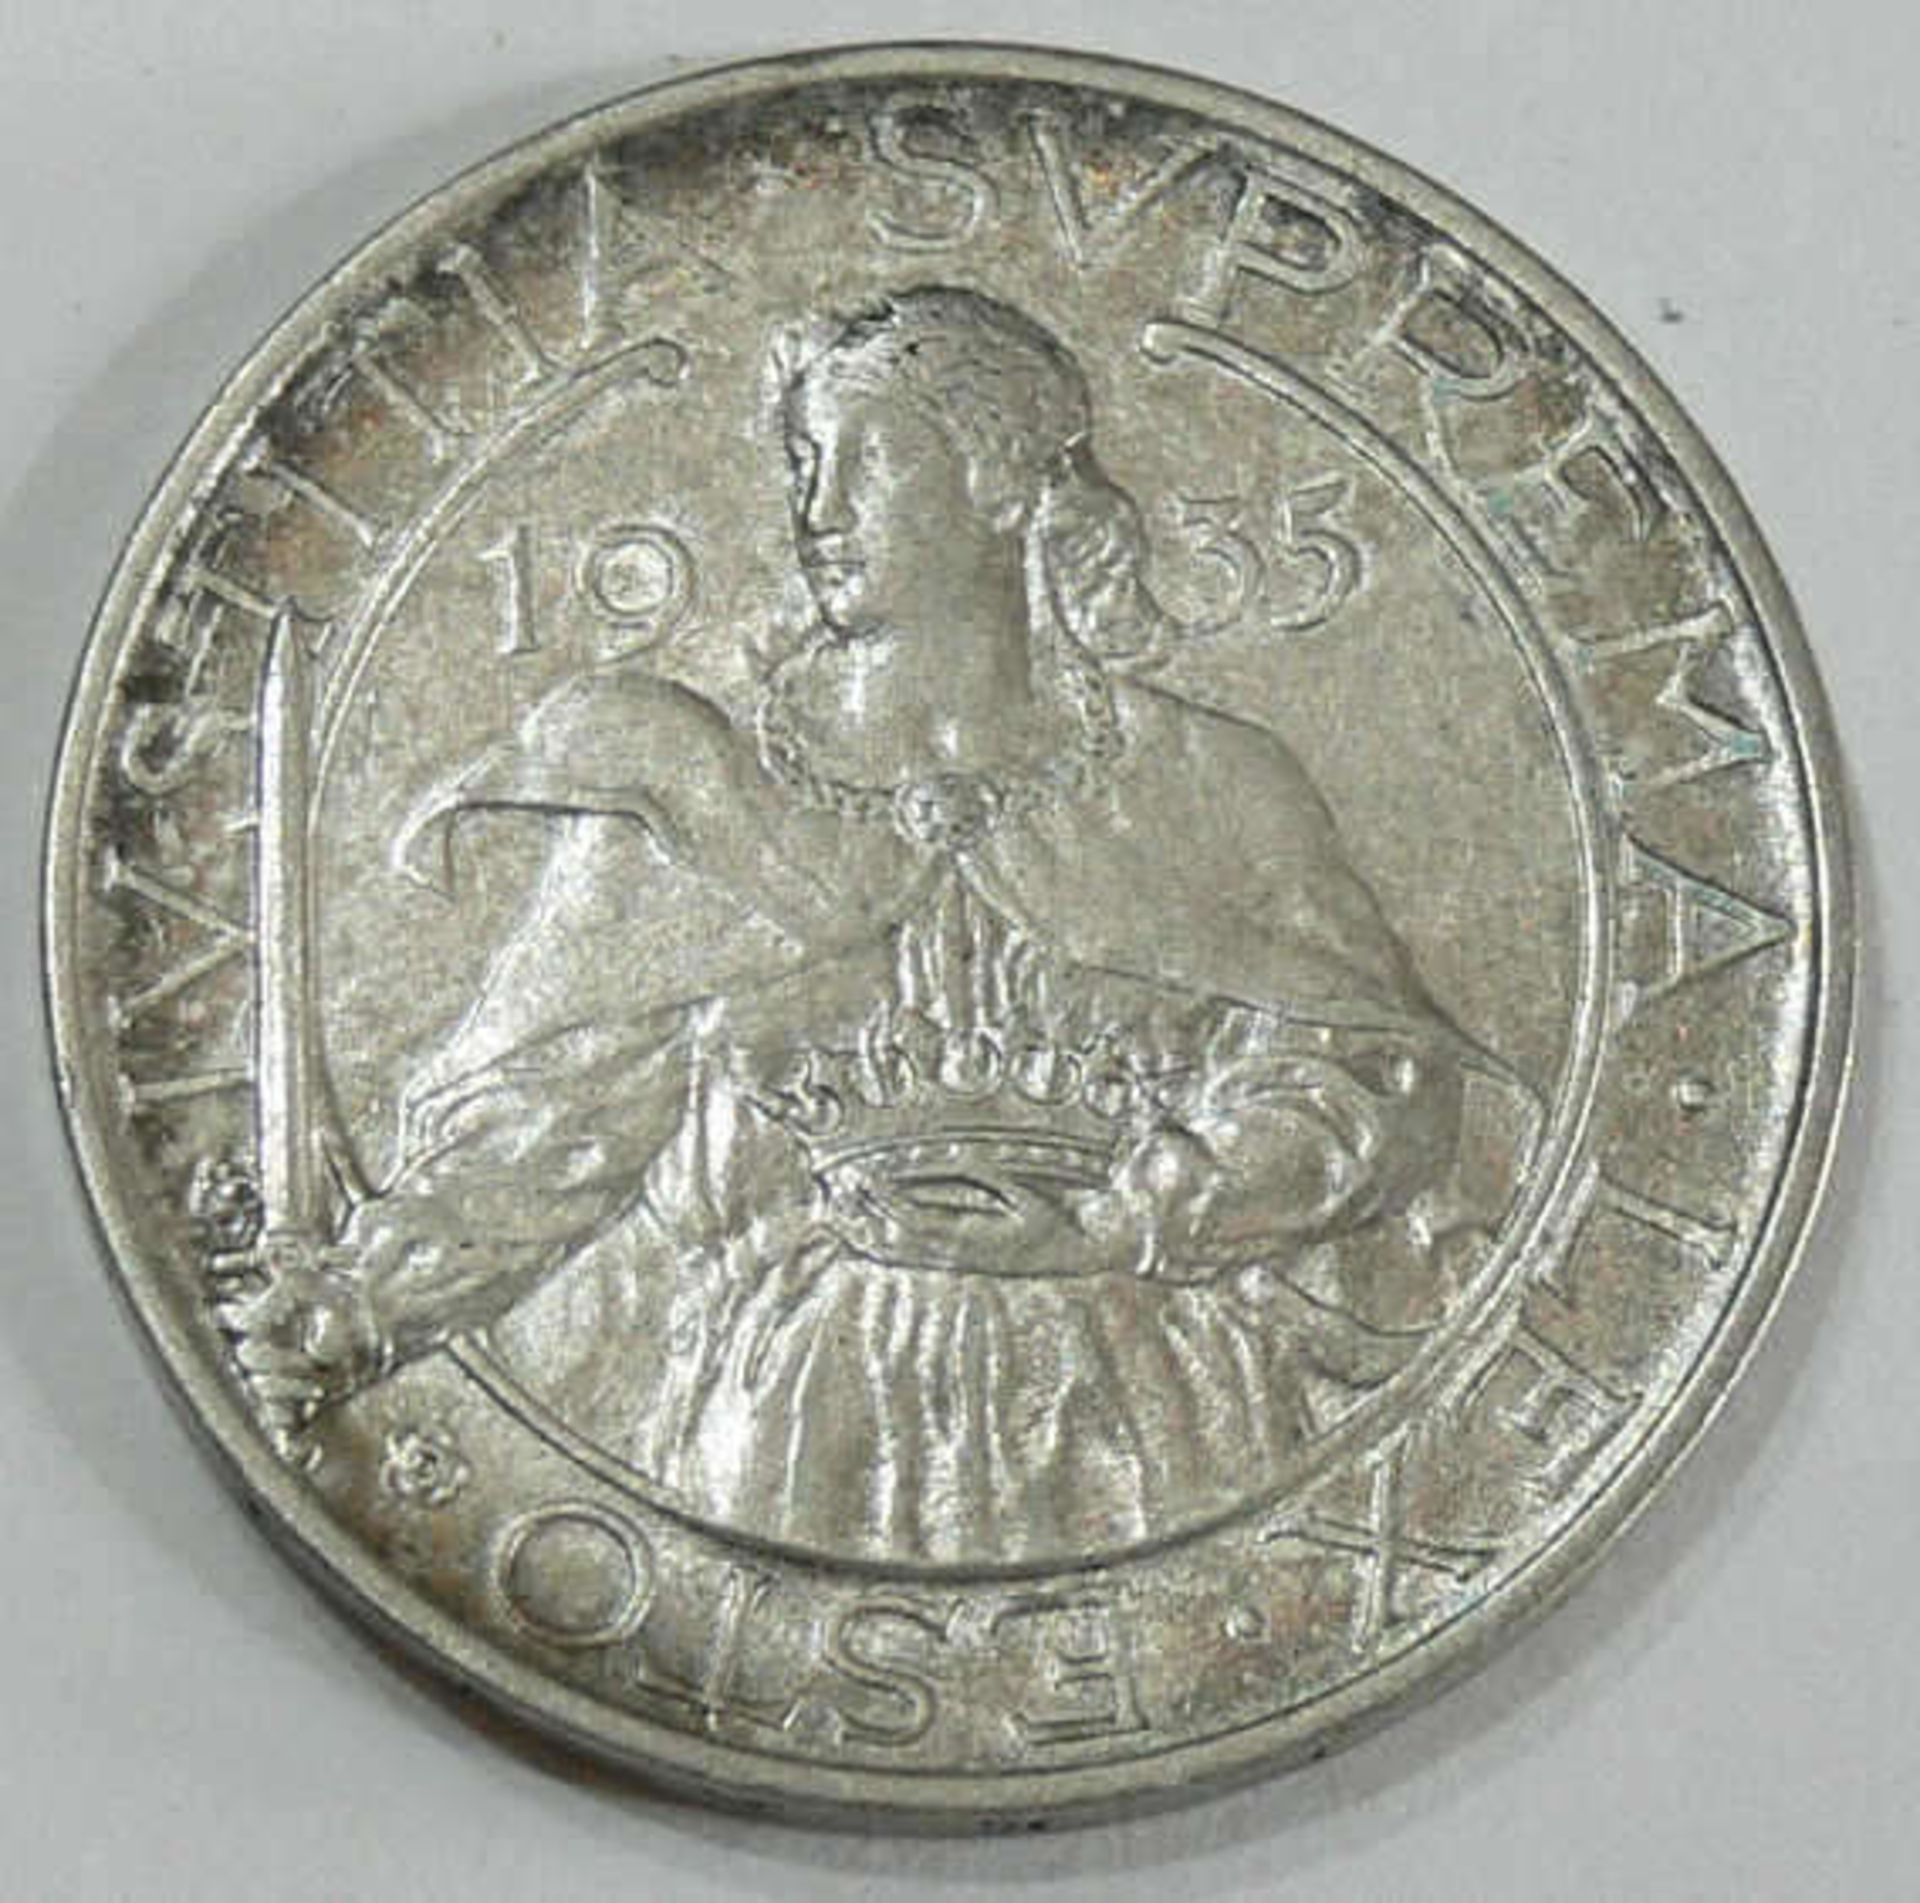 San Marino 1935, 10.- Lire - Silbermünze. Erhaltung: ss. San Marino 1935, 10.- Lire - silver coin.